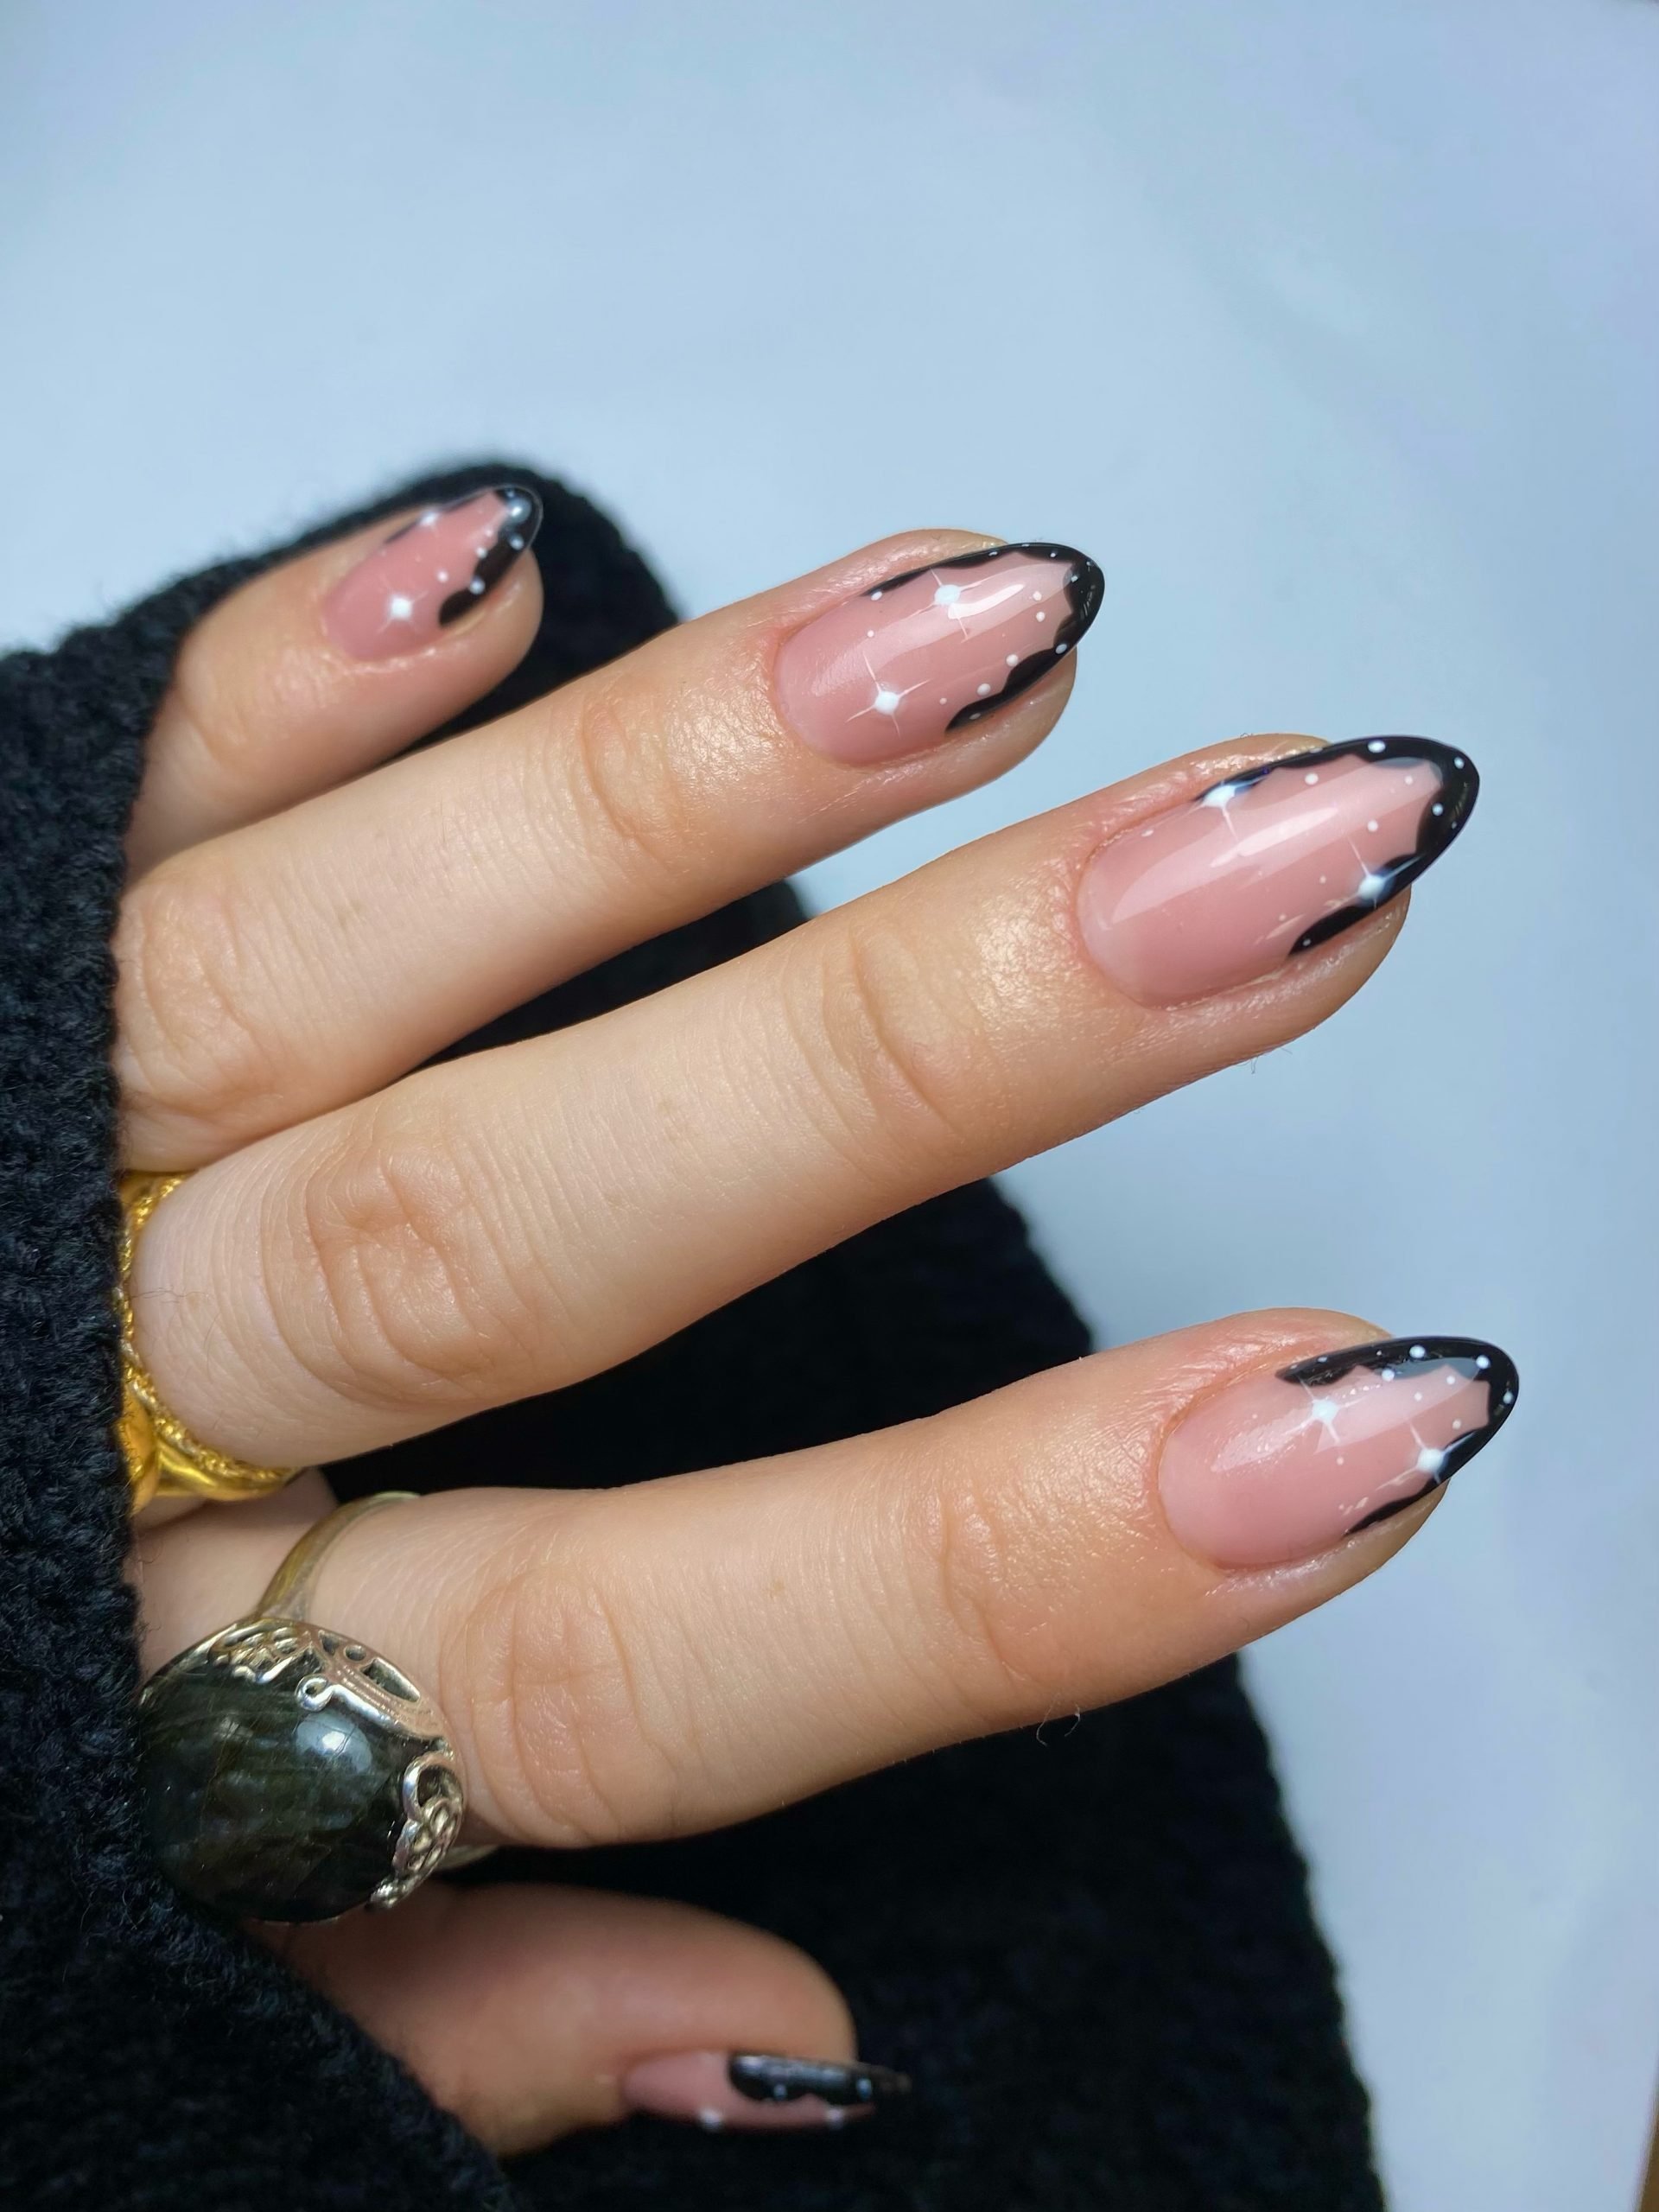 Halloween nails. Starry night sky design